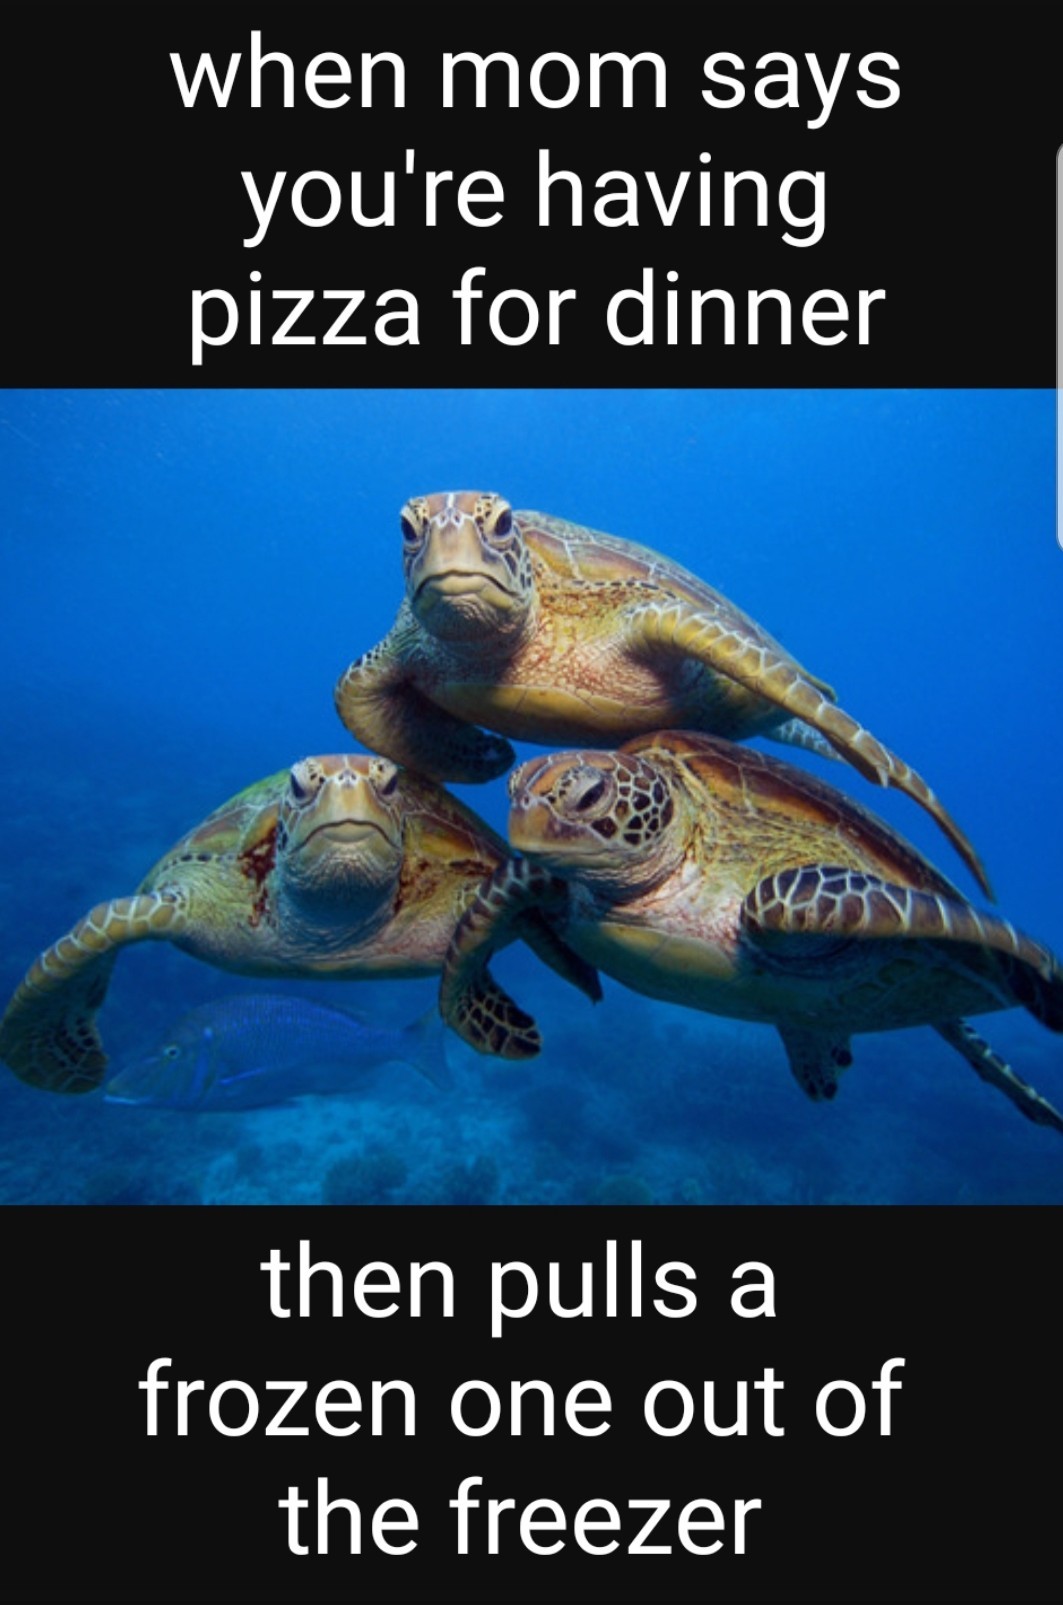 Frozen pizza sucks - meme